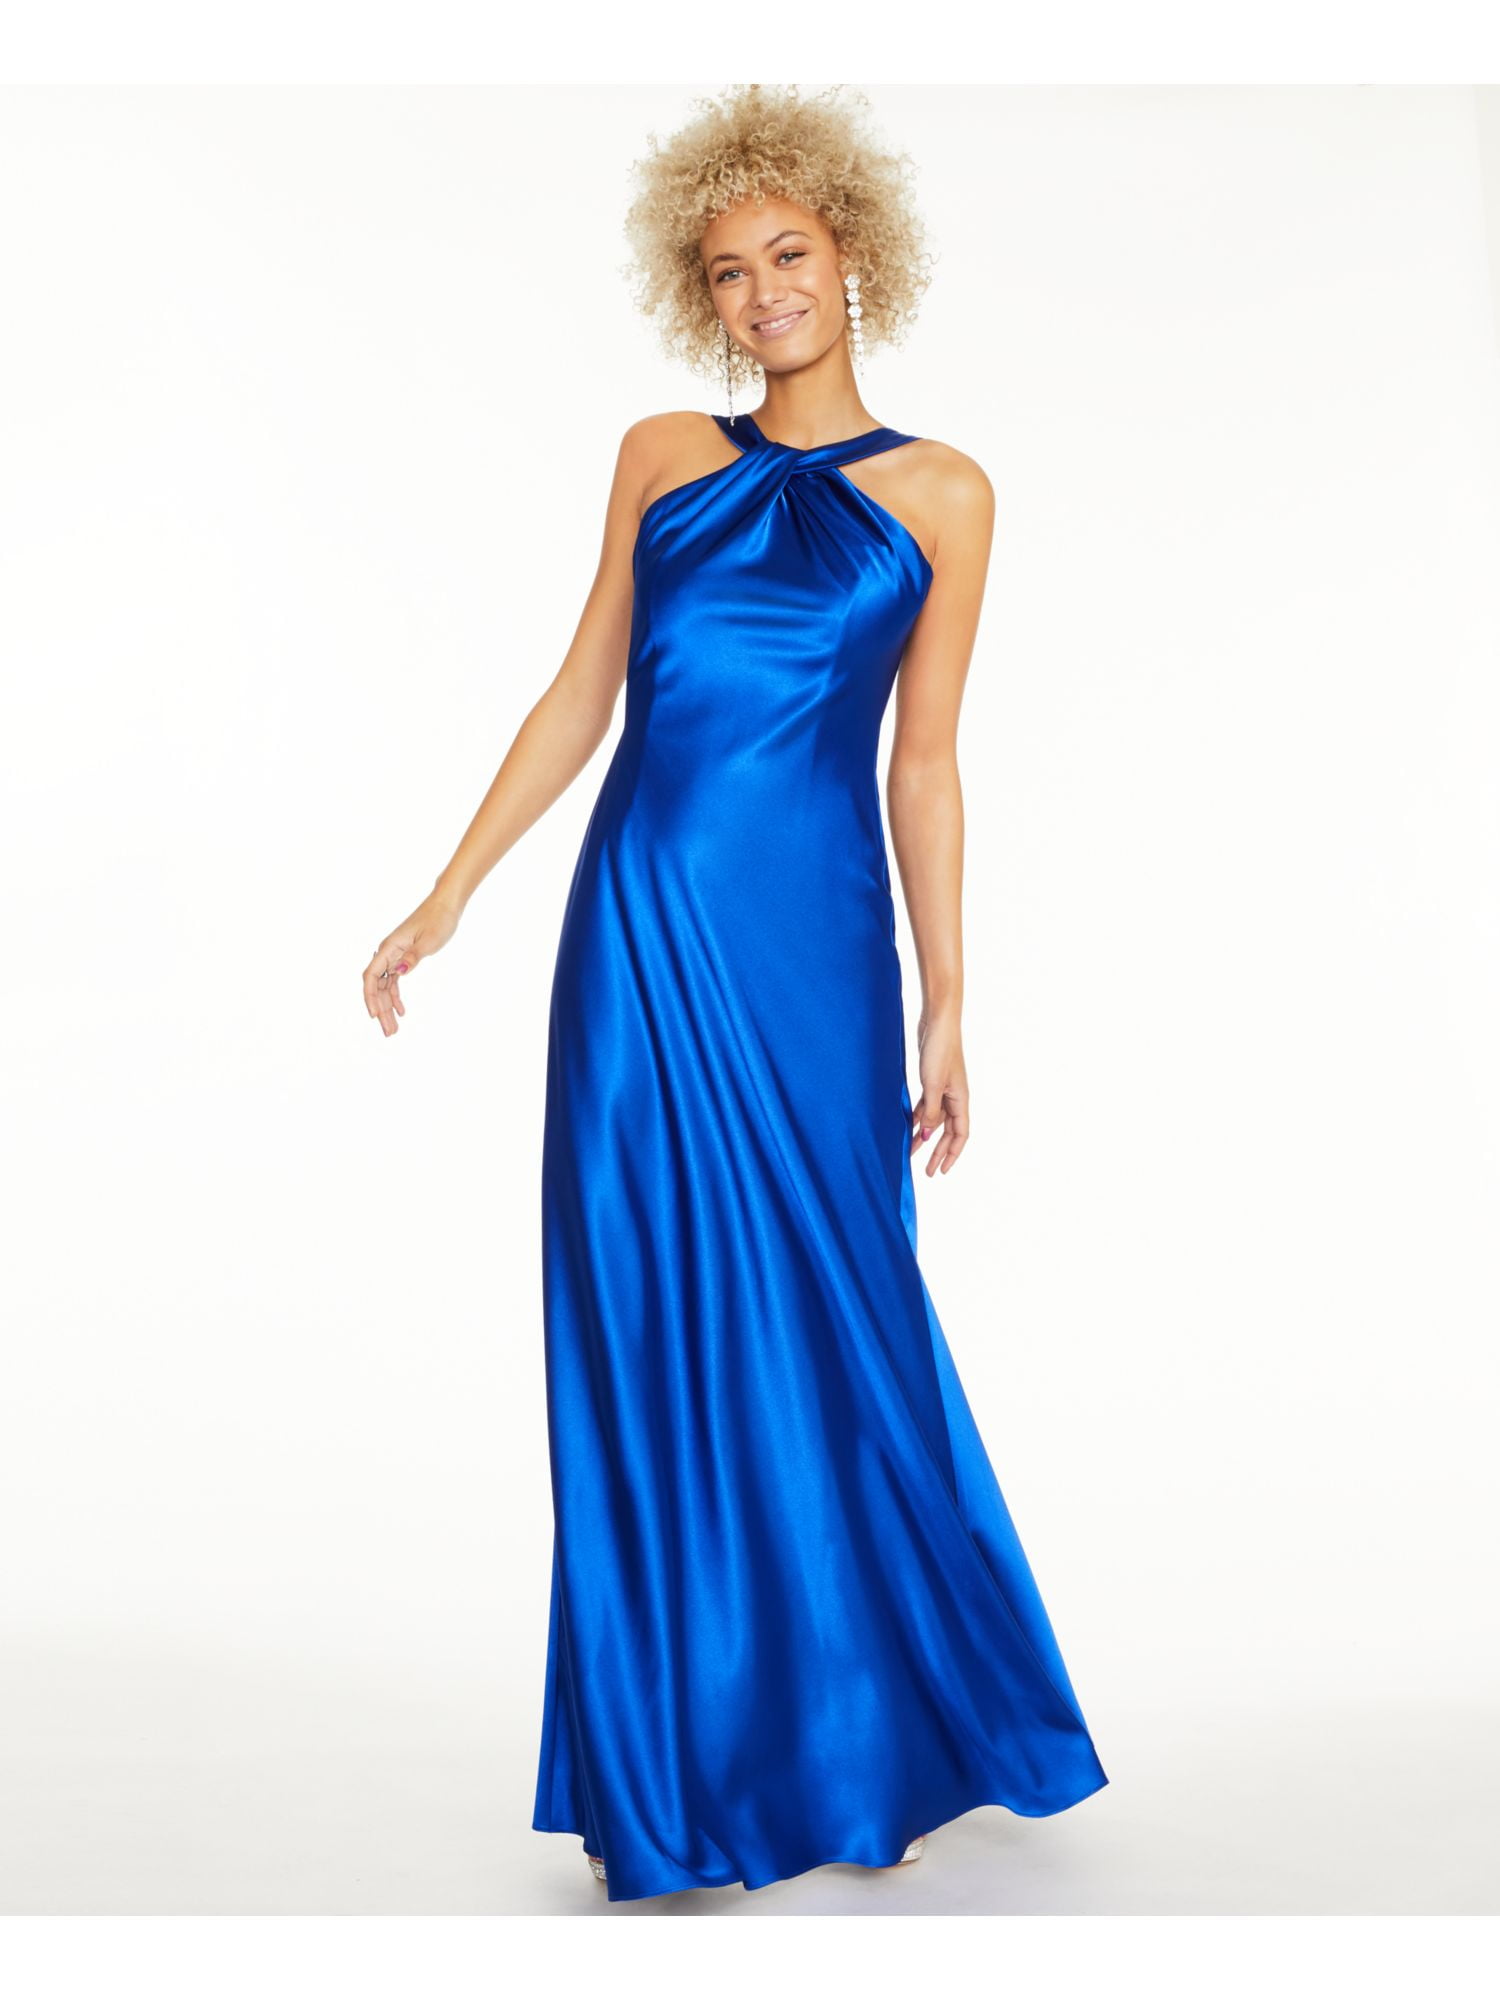 Descubrir 57+ imagen calvin klein blue halter dress